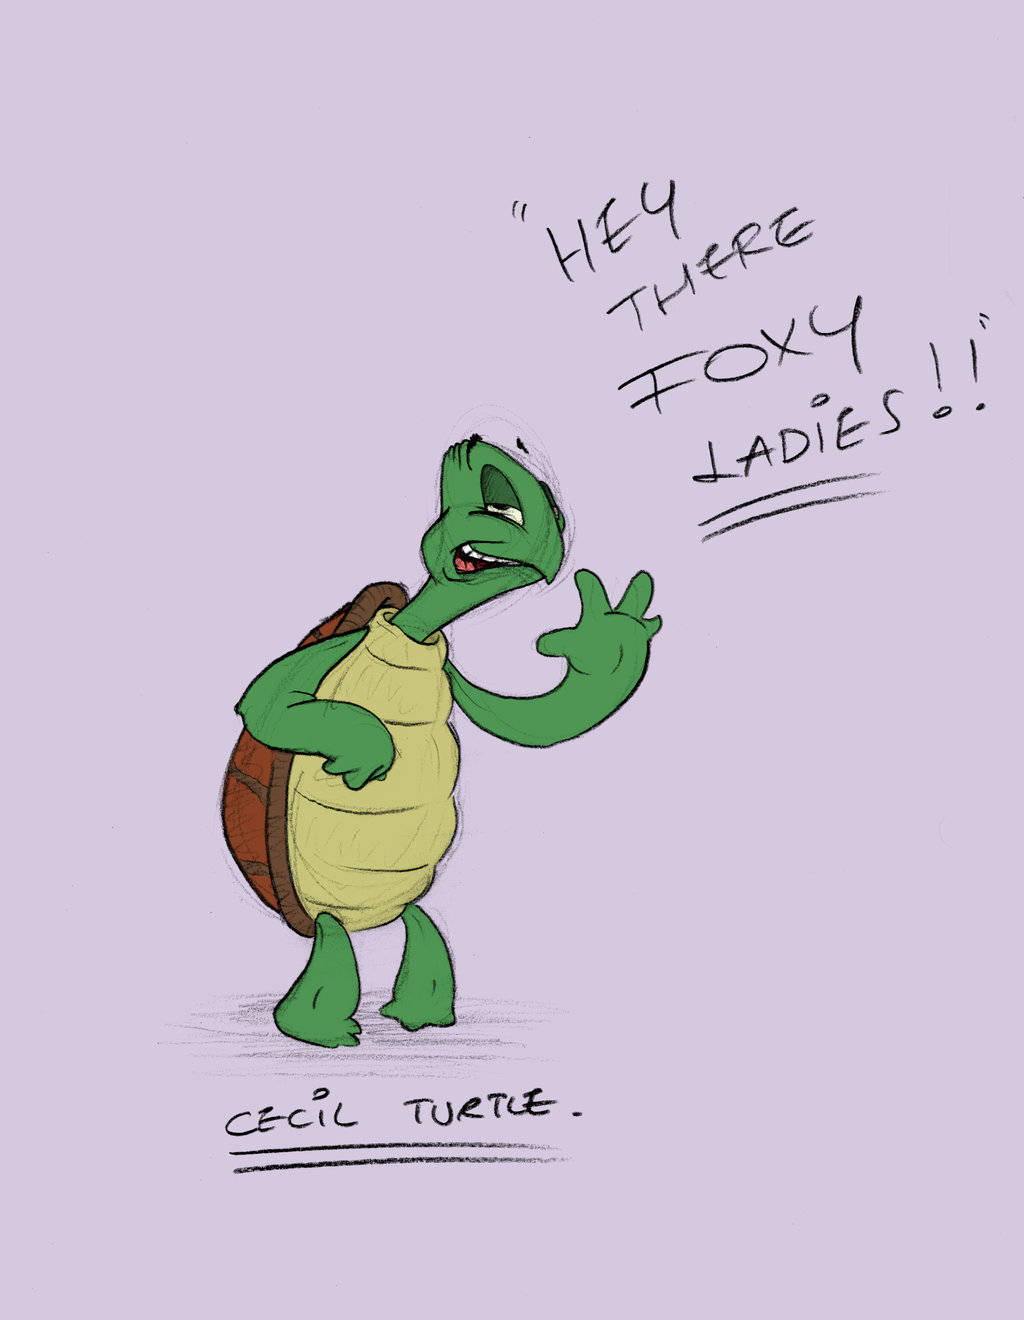 Free Cartoon Turtle Wallpaper Downloads, [100+] Cartoon Turtle Wallpapers  for FREE 